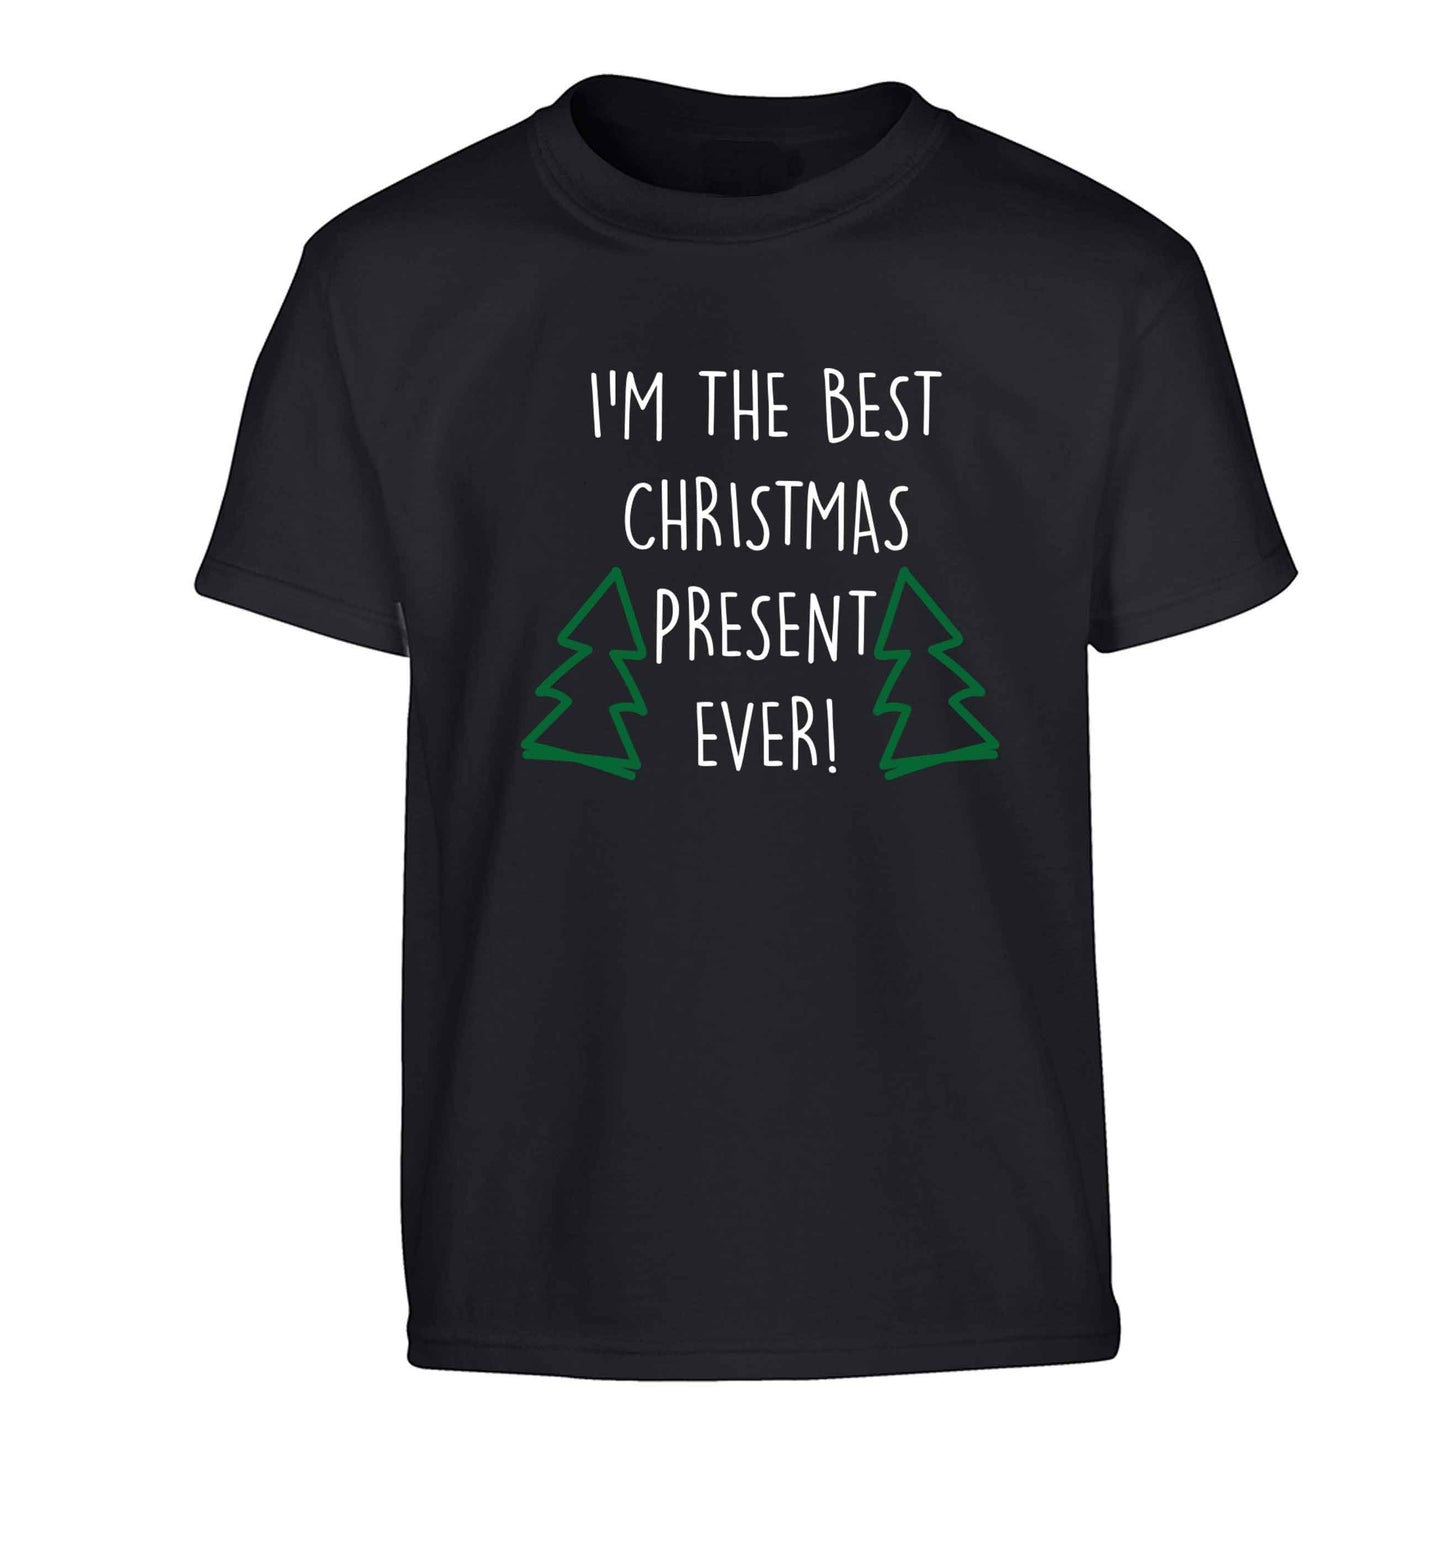 I'm the best Christmas present ever Children's black Tshirt 12-13 Years